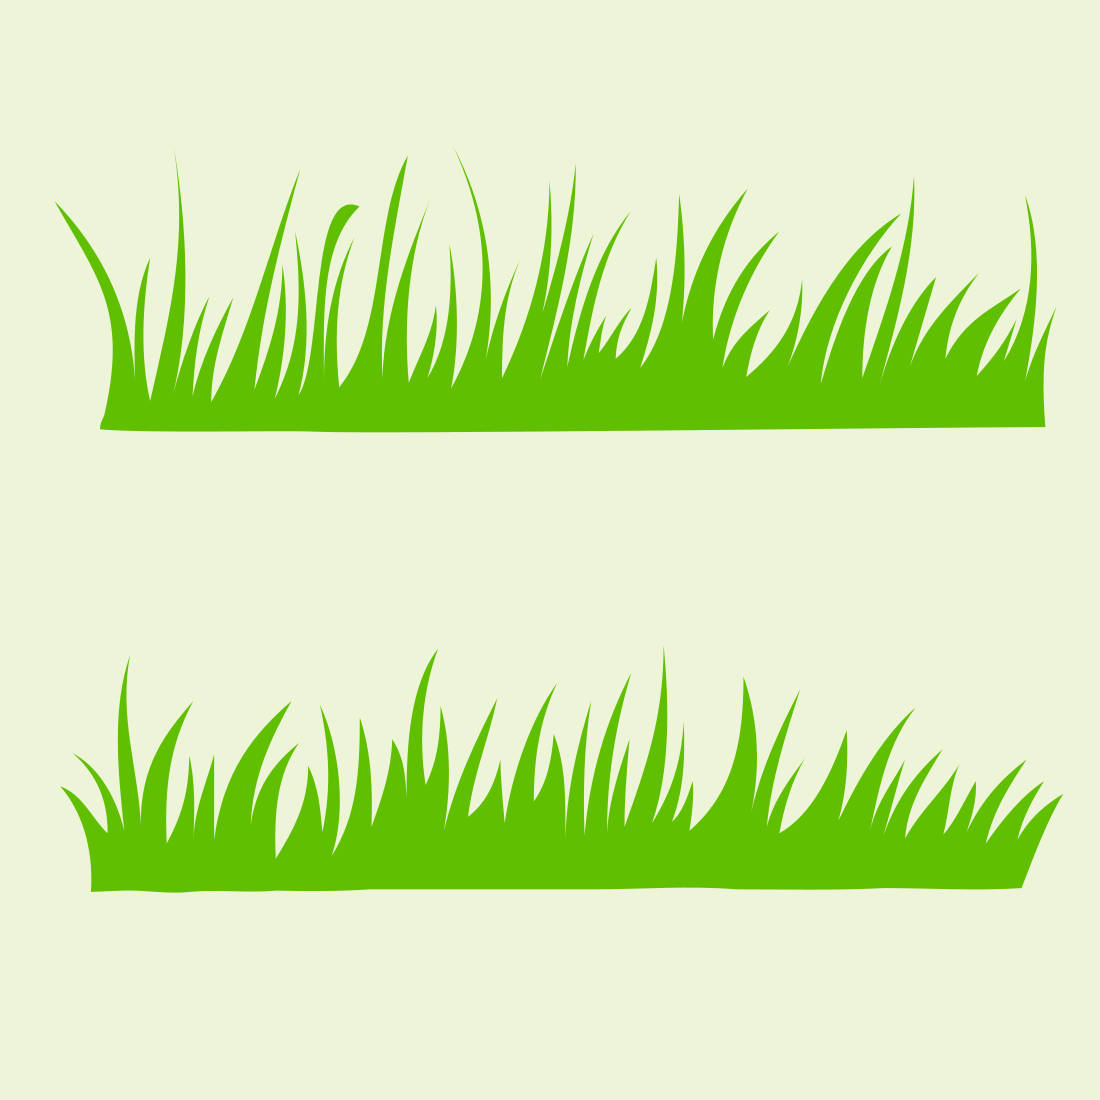 Green Grass Cartoon Style Illustration previews.